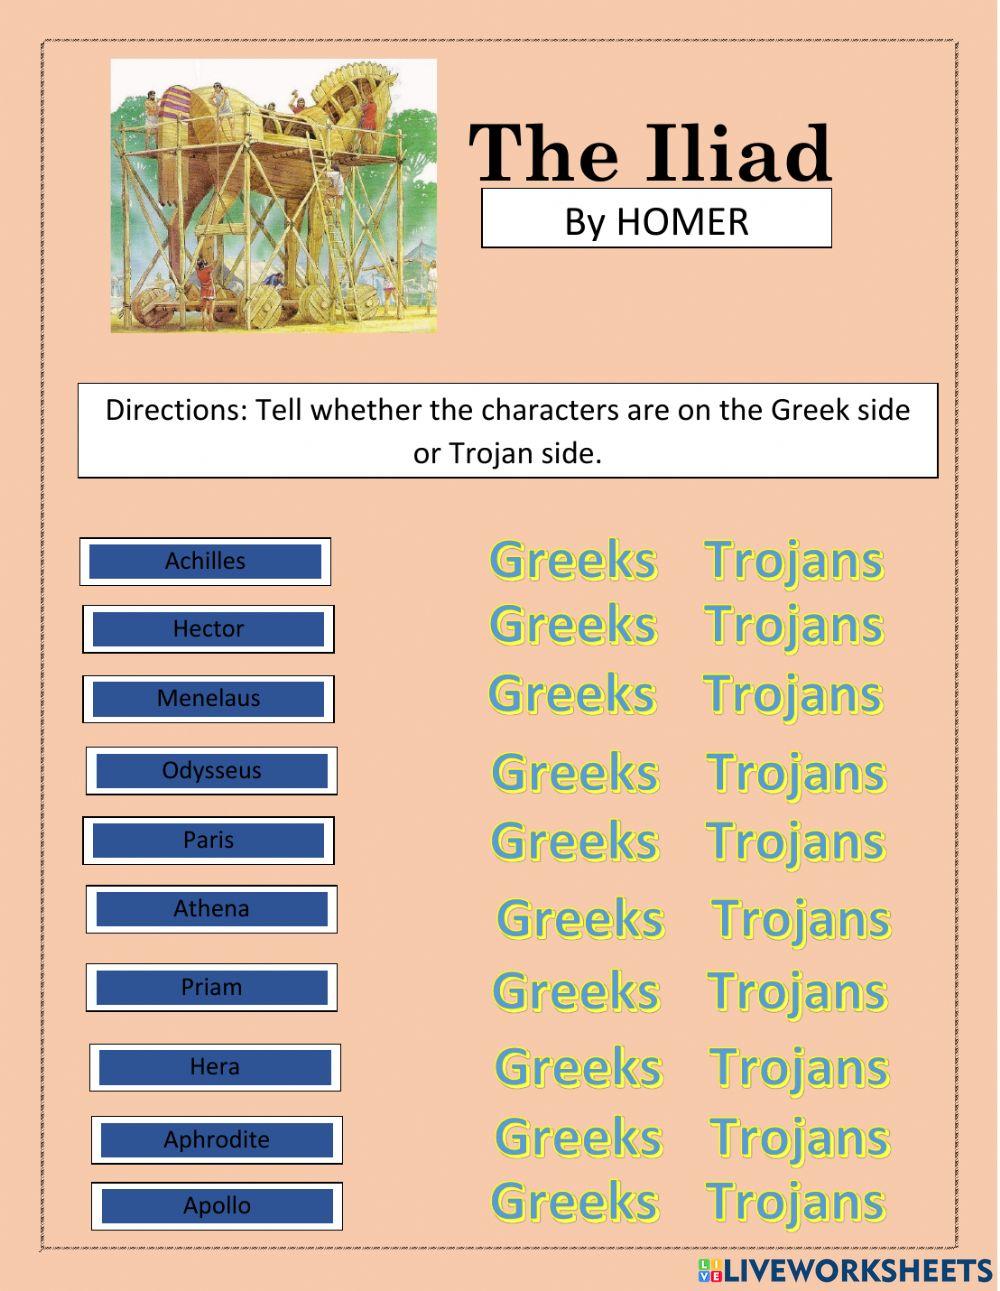 Greeks or Trojans